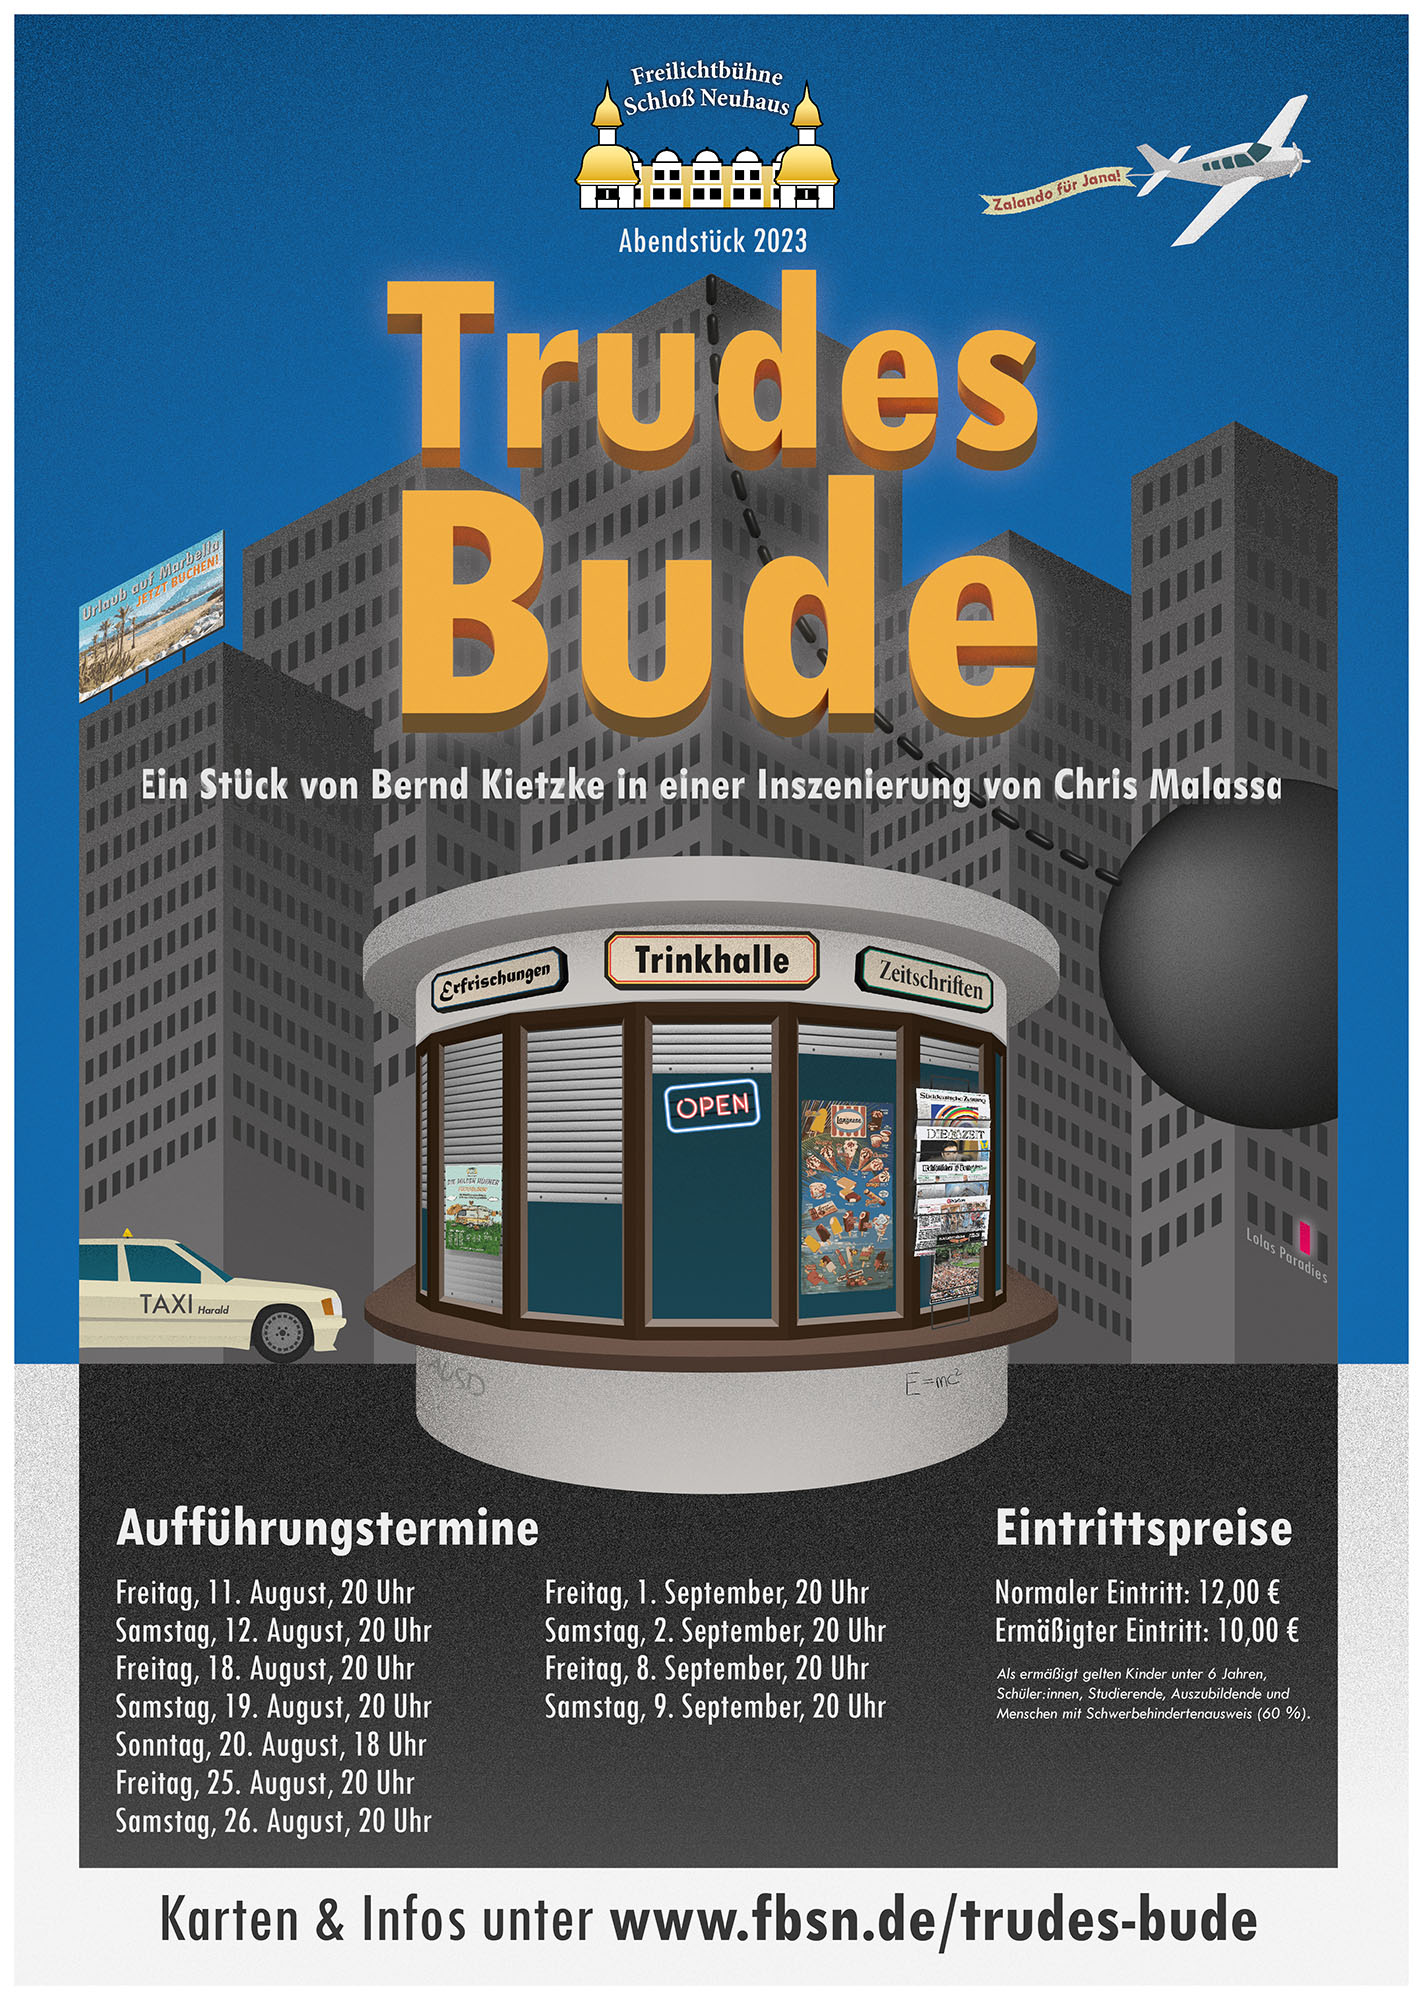 Plakat zu Trudes Bude